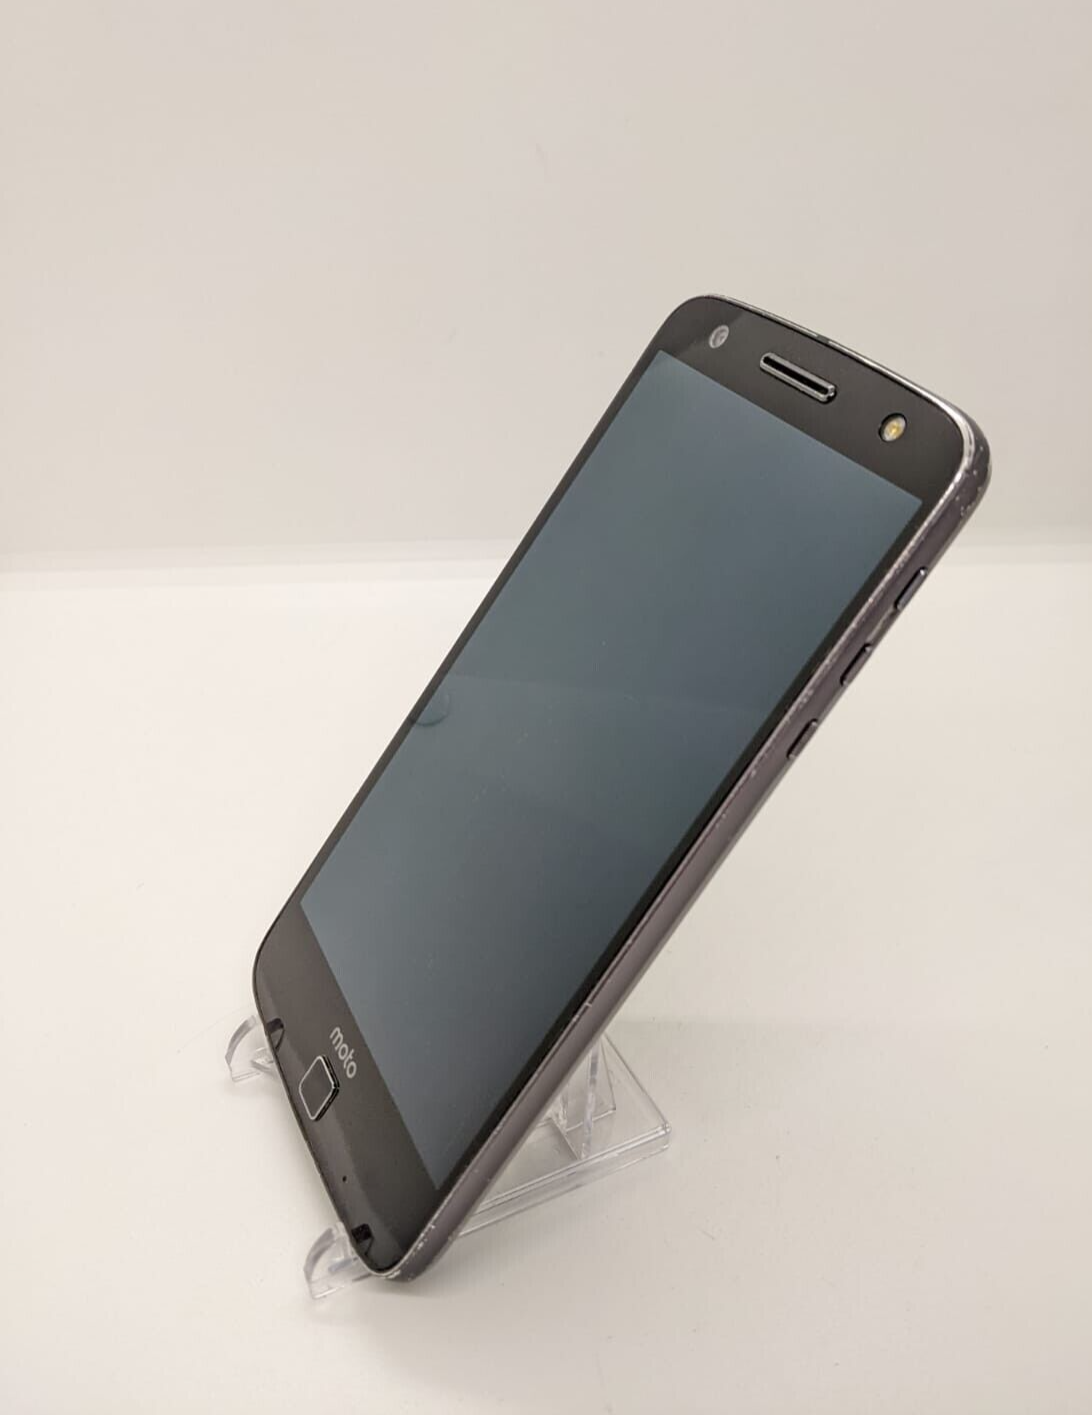 Motorola Moto Z Force Droid Verizon Android 4G Smartphone Black XT1650-02 (B-)